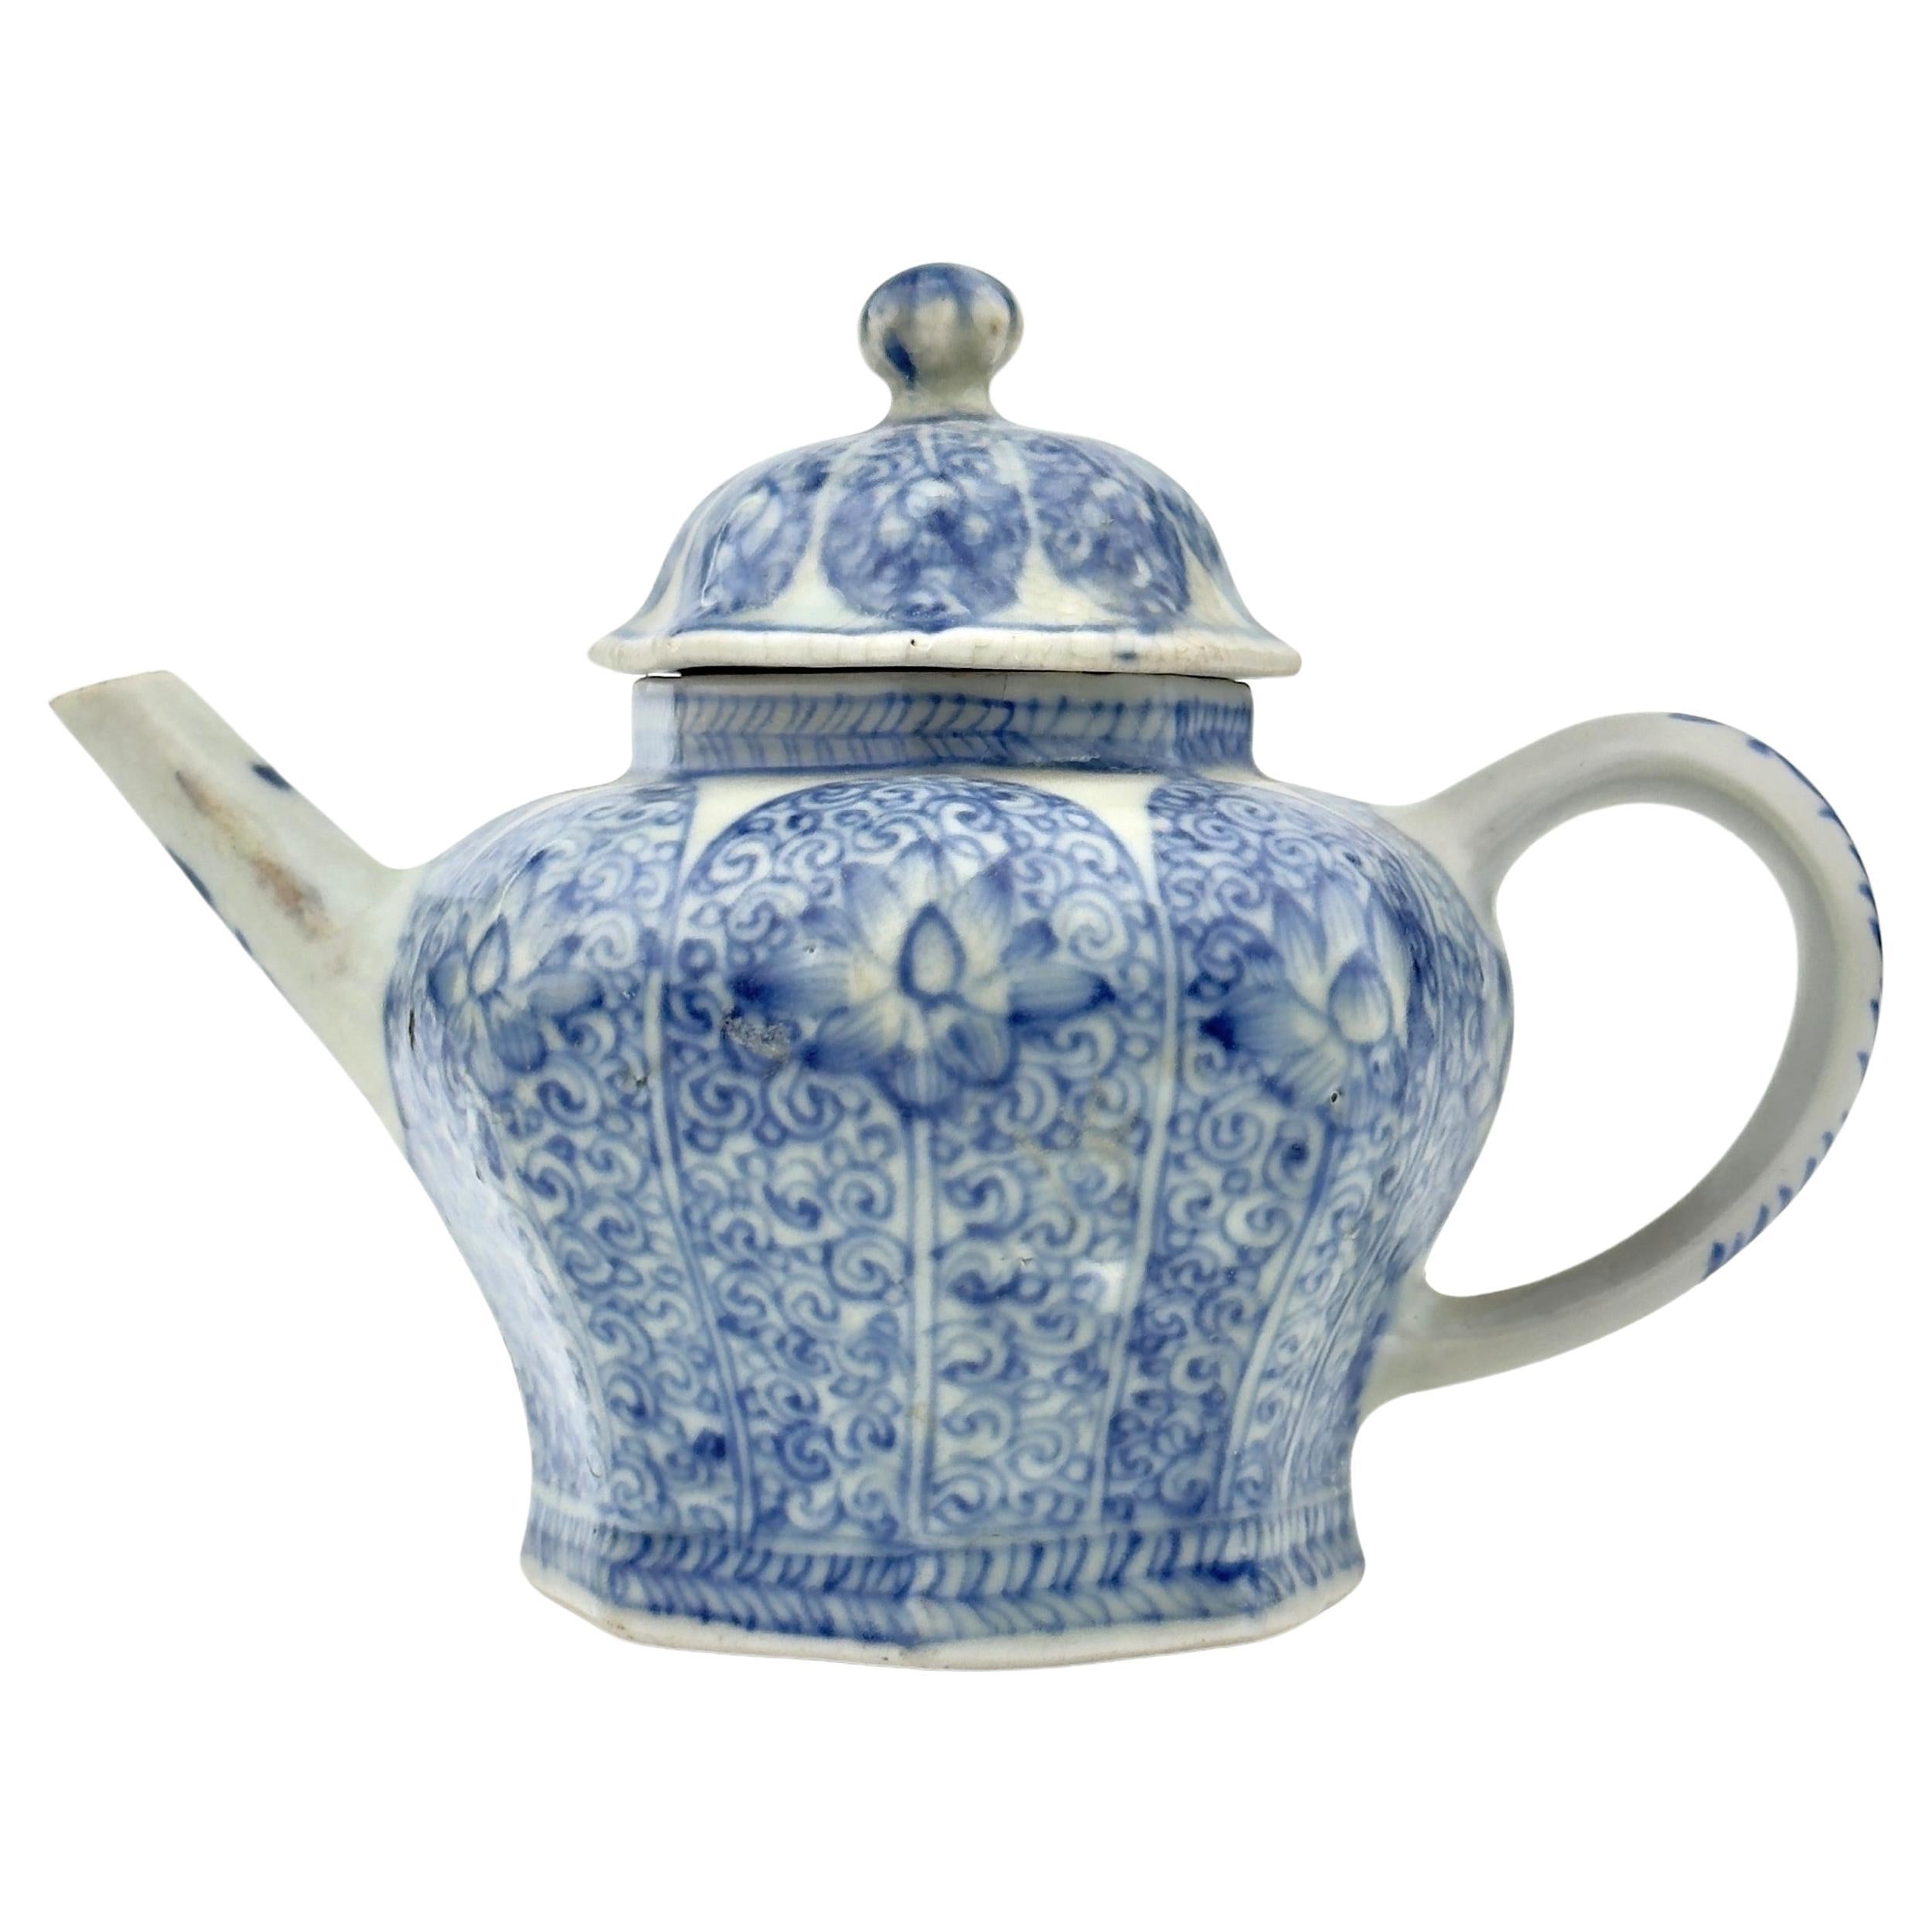 Blau-weiße Teekanne CIRCA 1725, Qing Dynasty, Yongzheng Reign